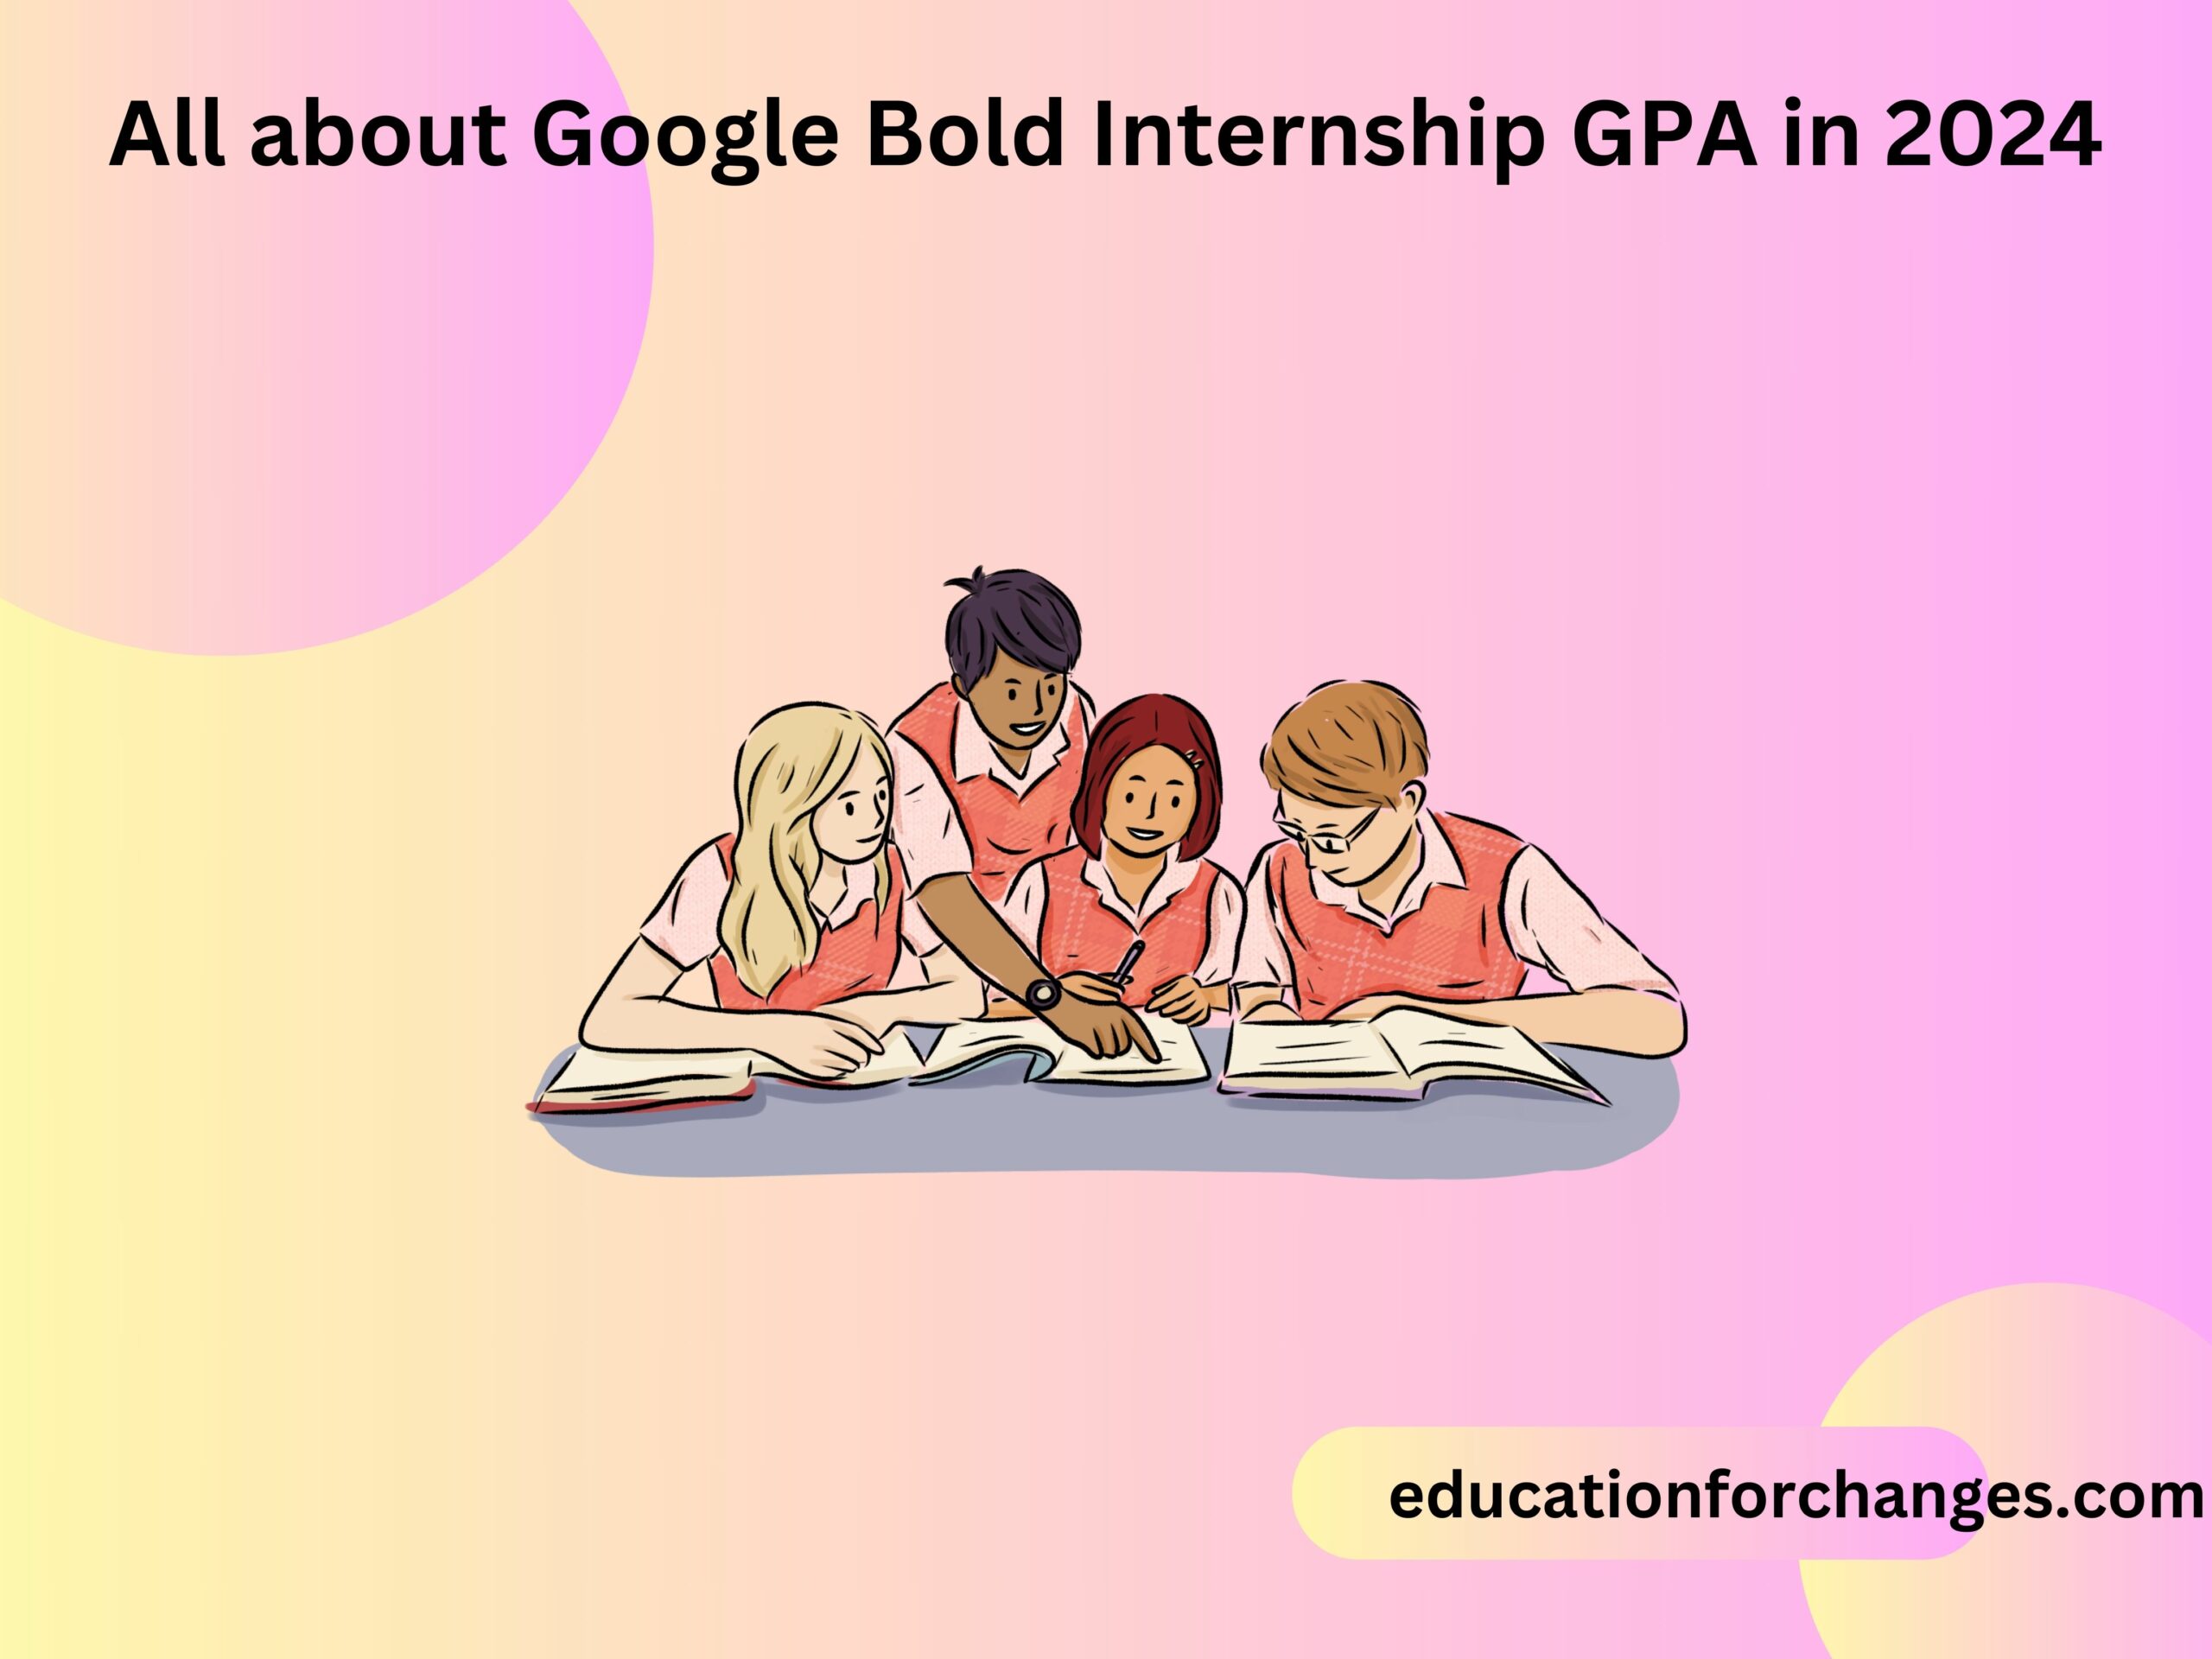 All about Google Bold Internship GPA in 2024